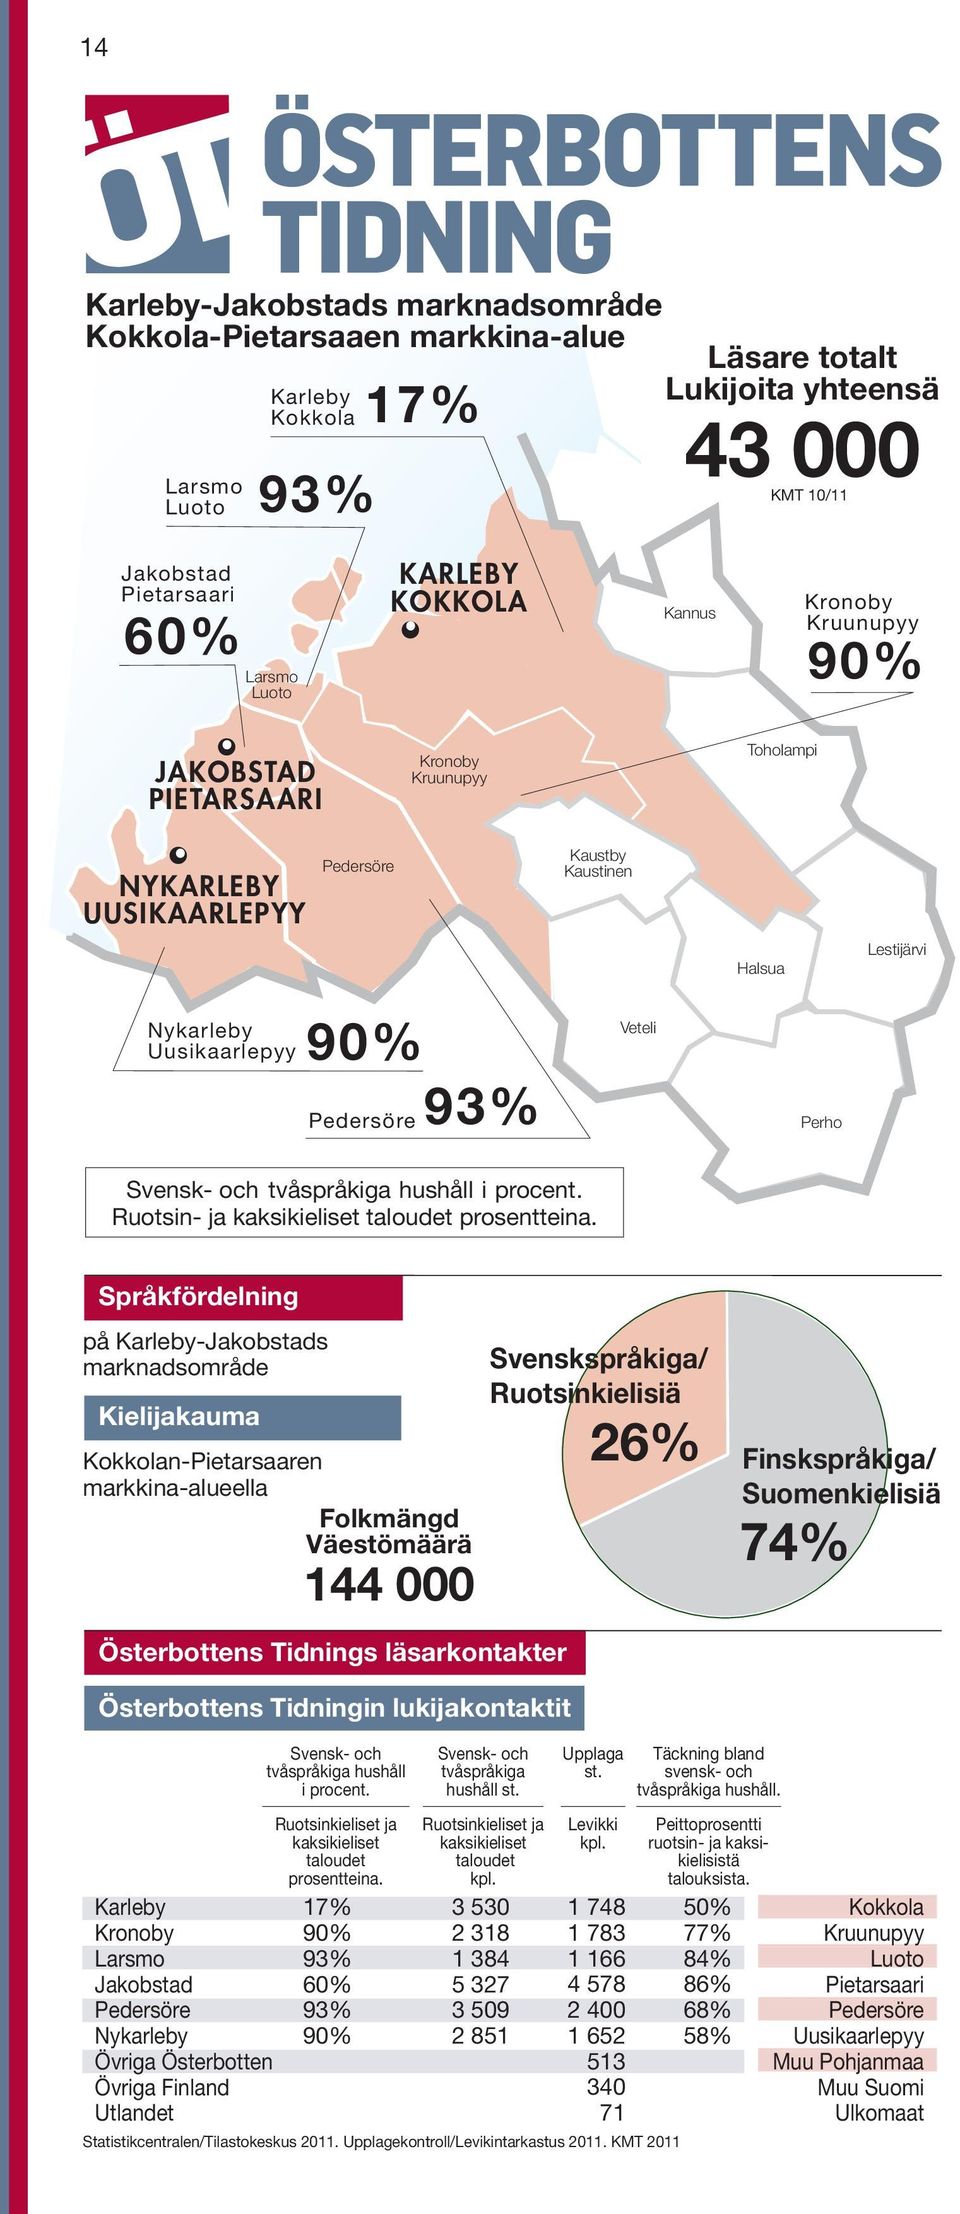 93% Veteli Perho Svensk- och tvåspråkiga hushåll i procent. Ruotsin- ja kaksikieliset taloudet prosentteina.